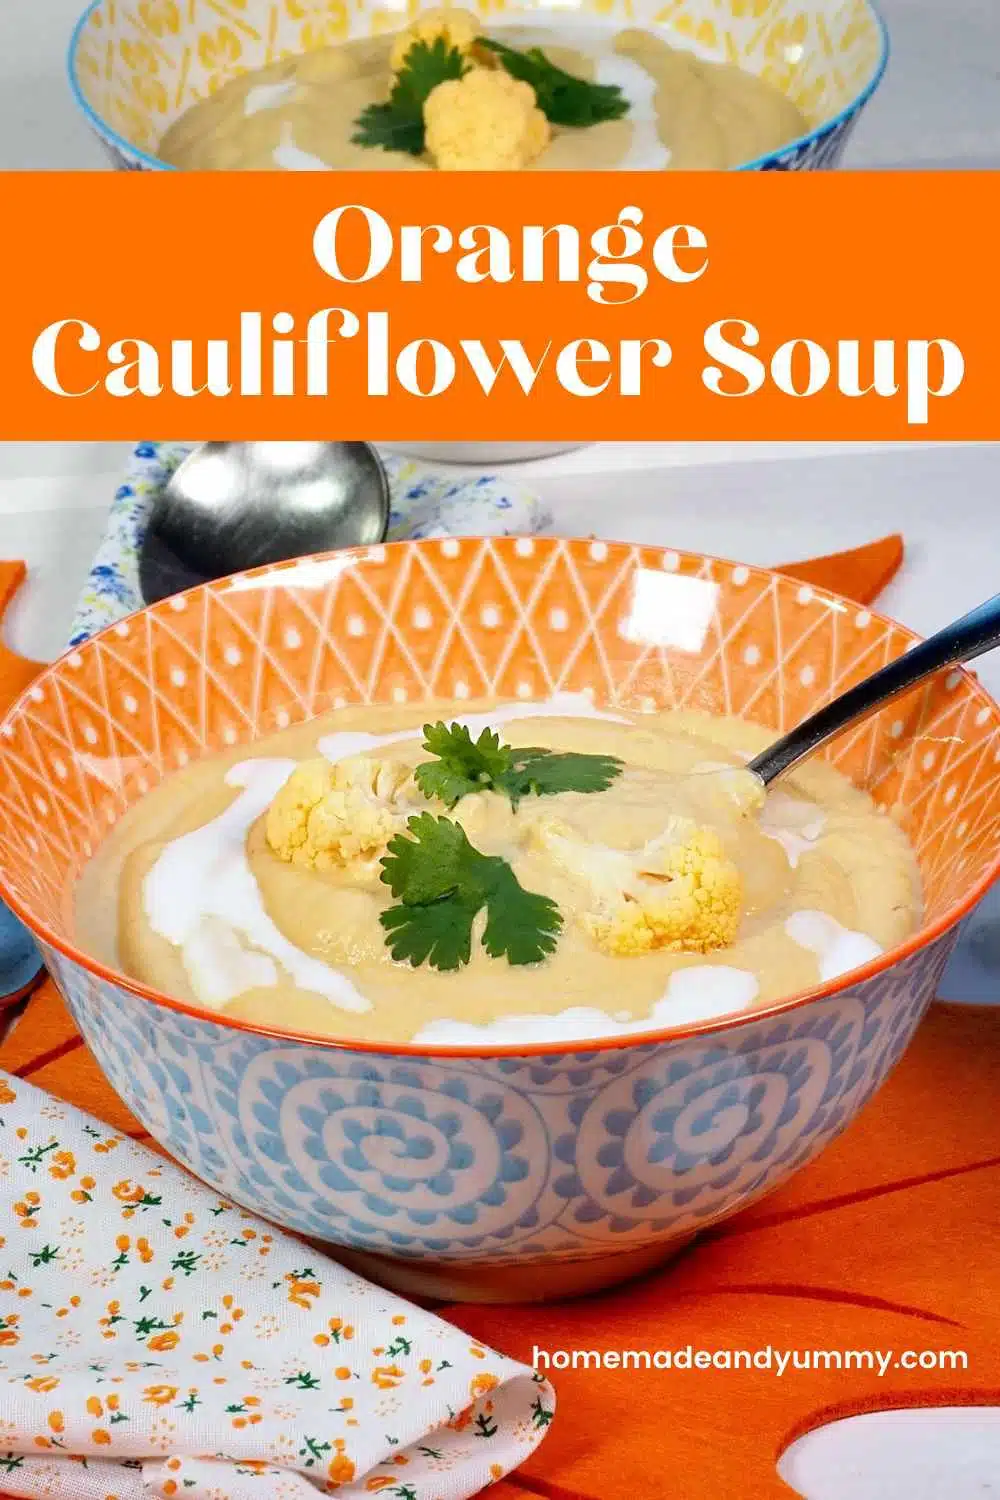 Curried Orange Cauliflower Blender Soup pin image.